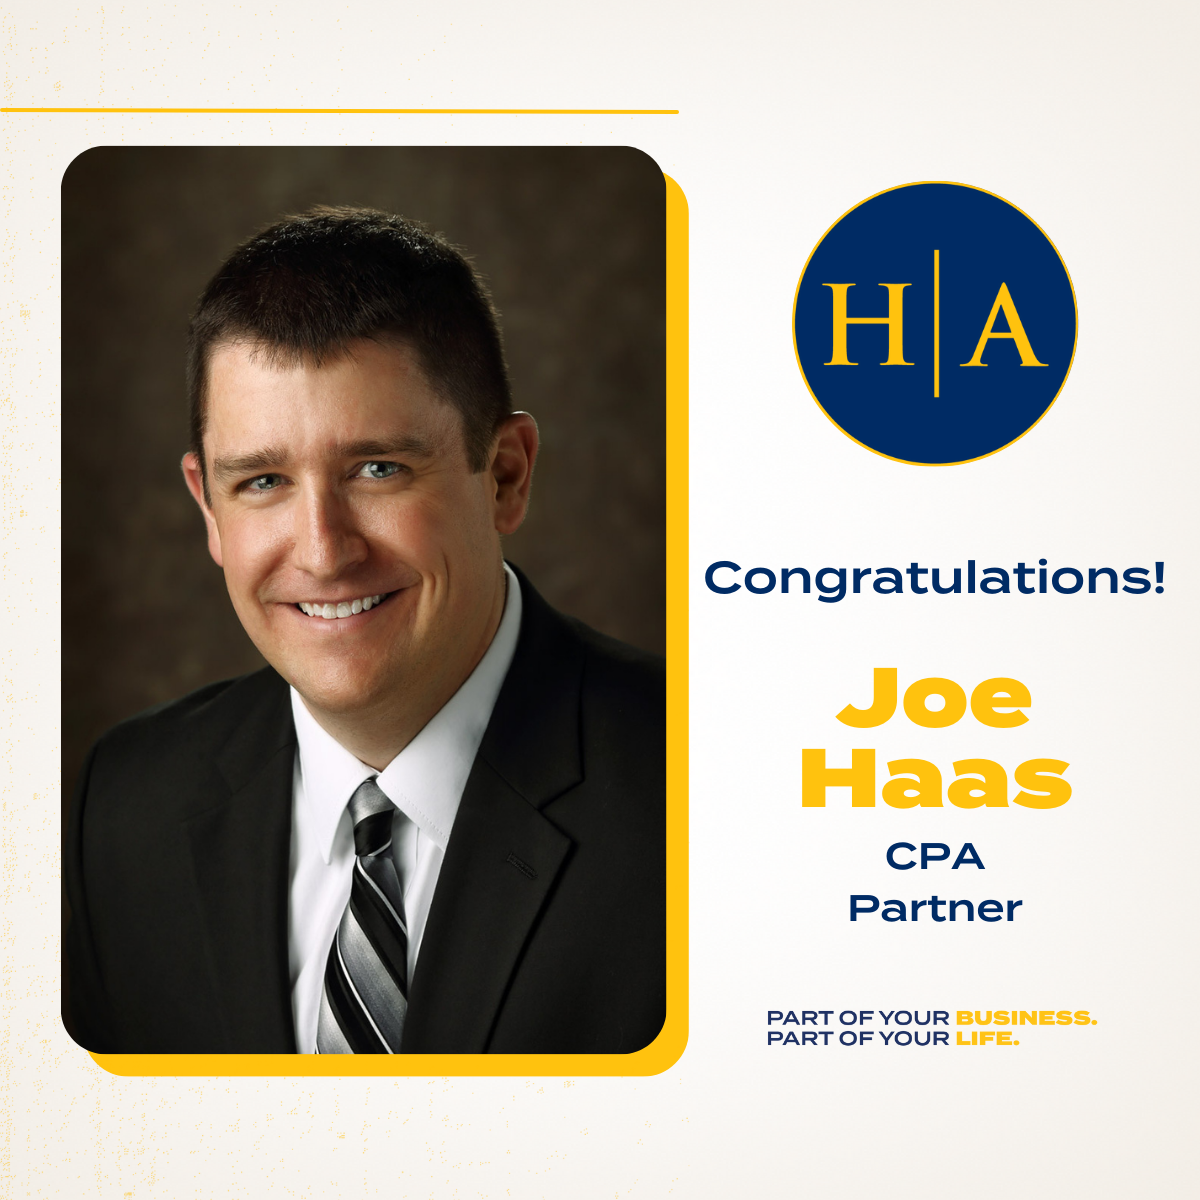 Joseph-Haas-Partner image